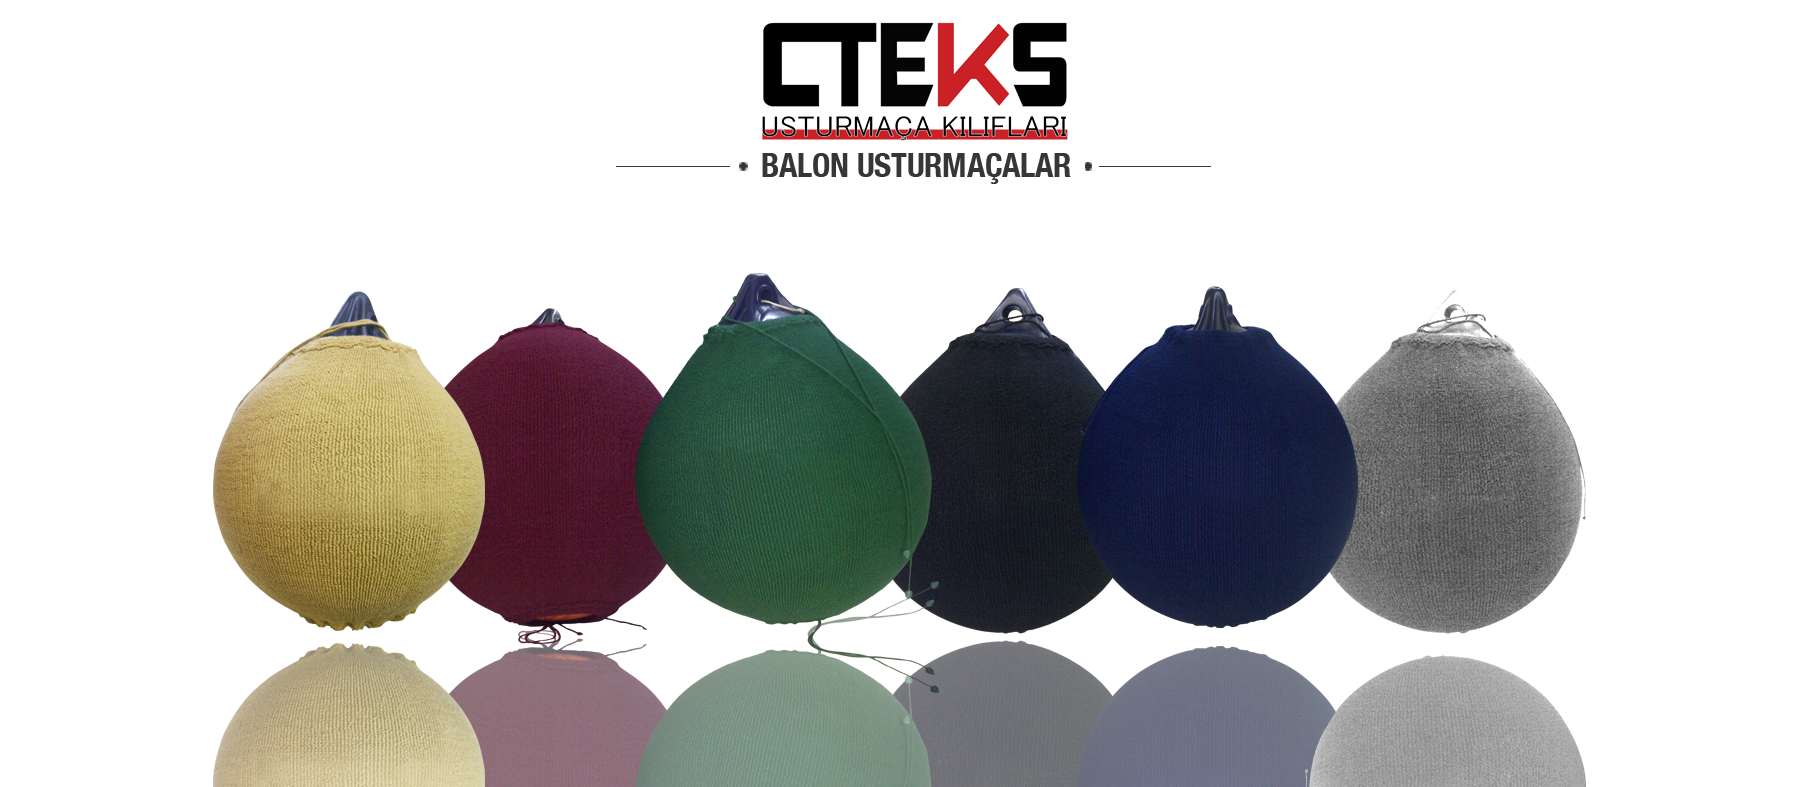 http://www.cteks.com.tr/usturmacalar/balon-usturmacalar